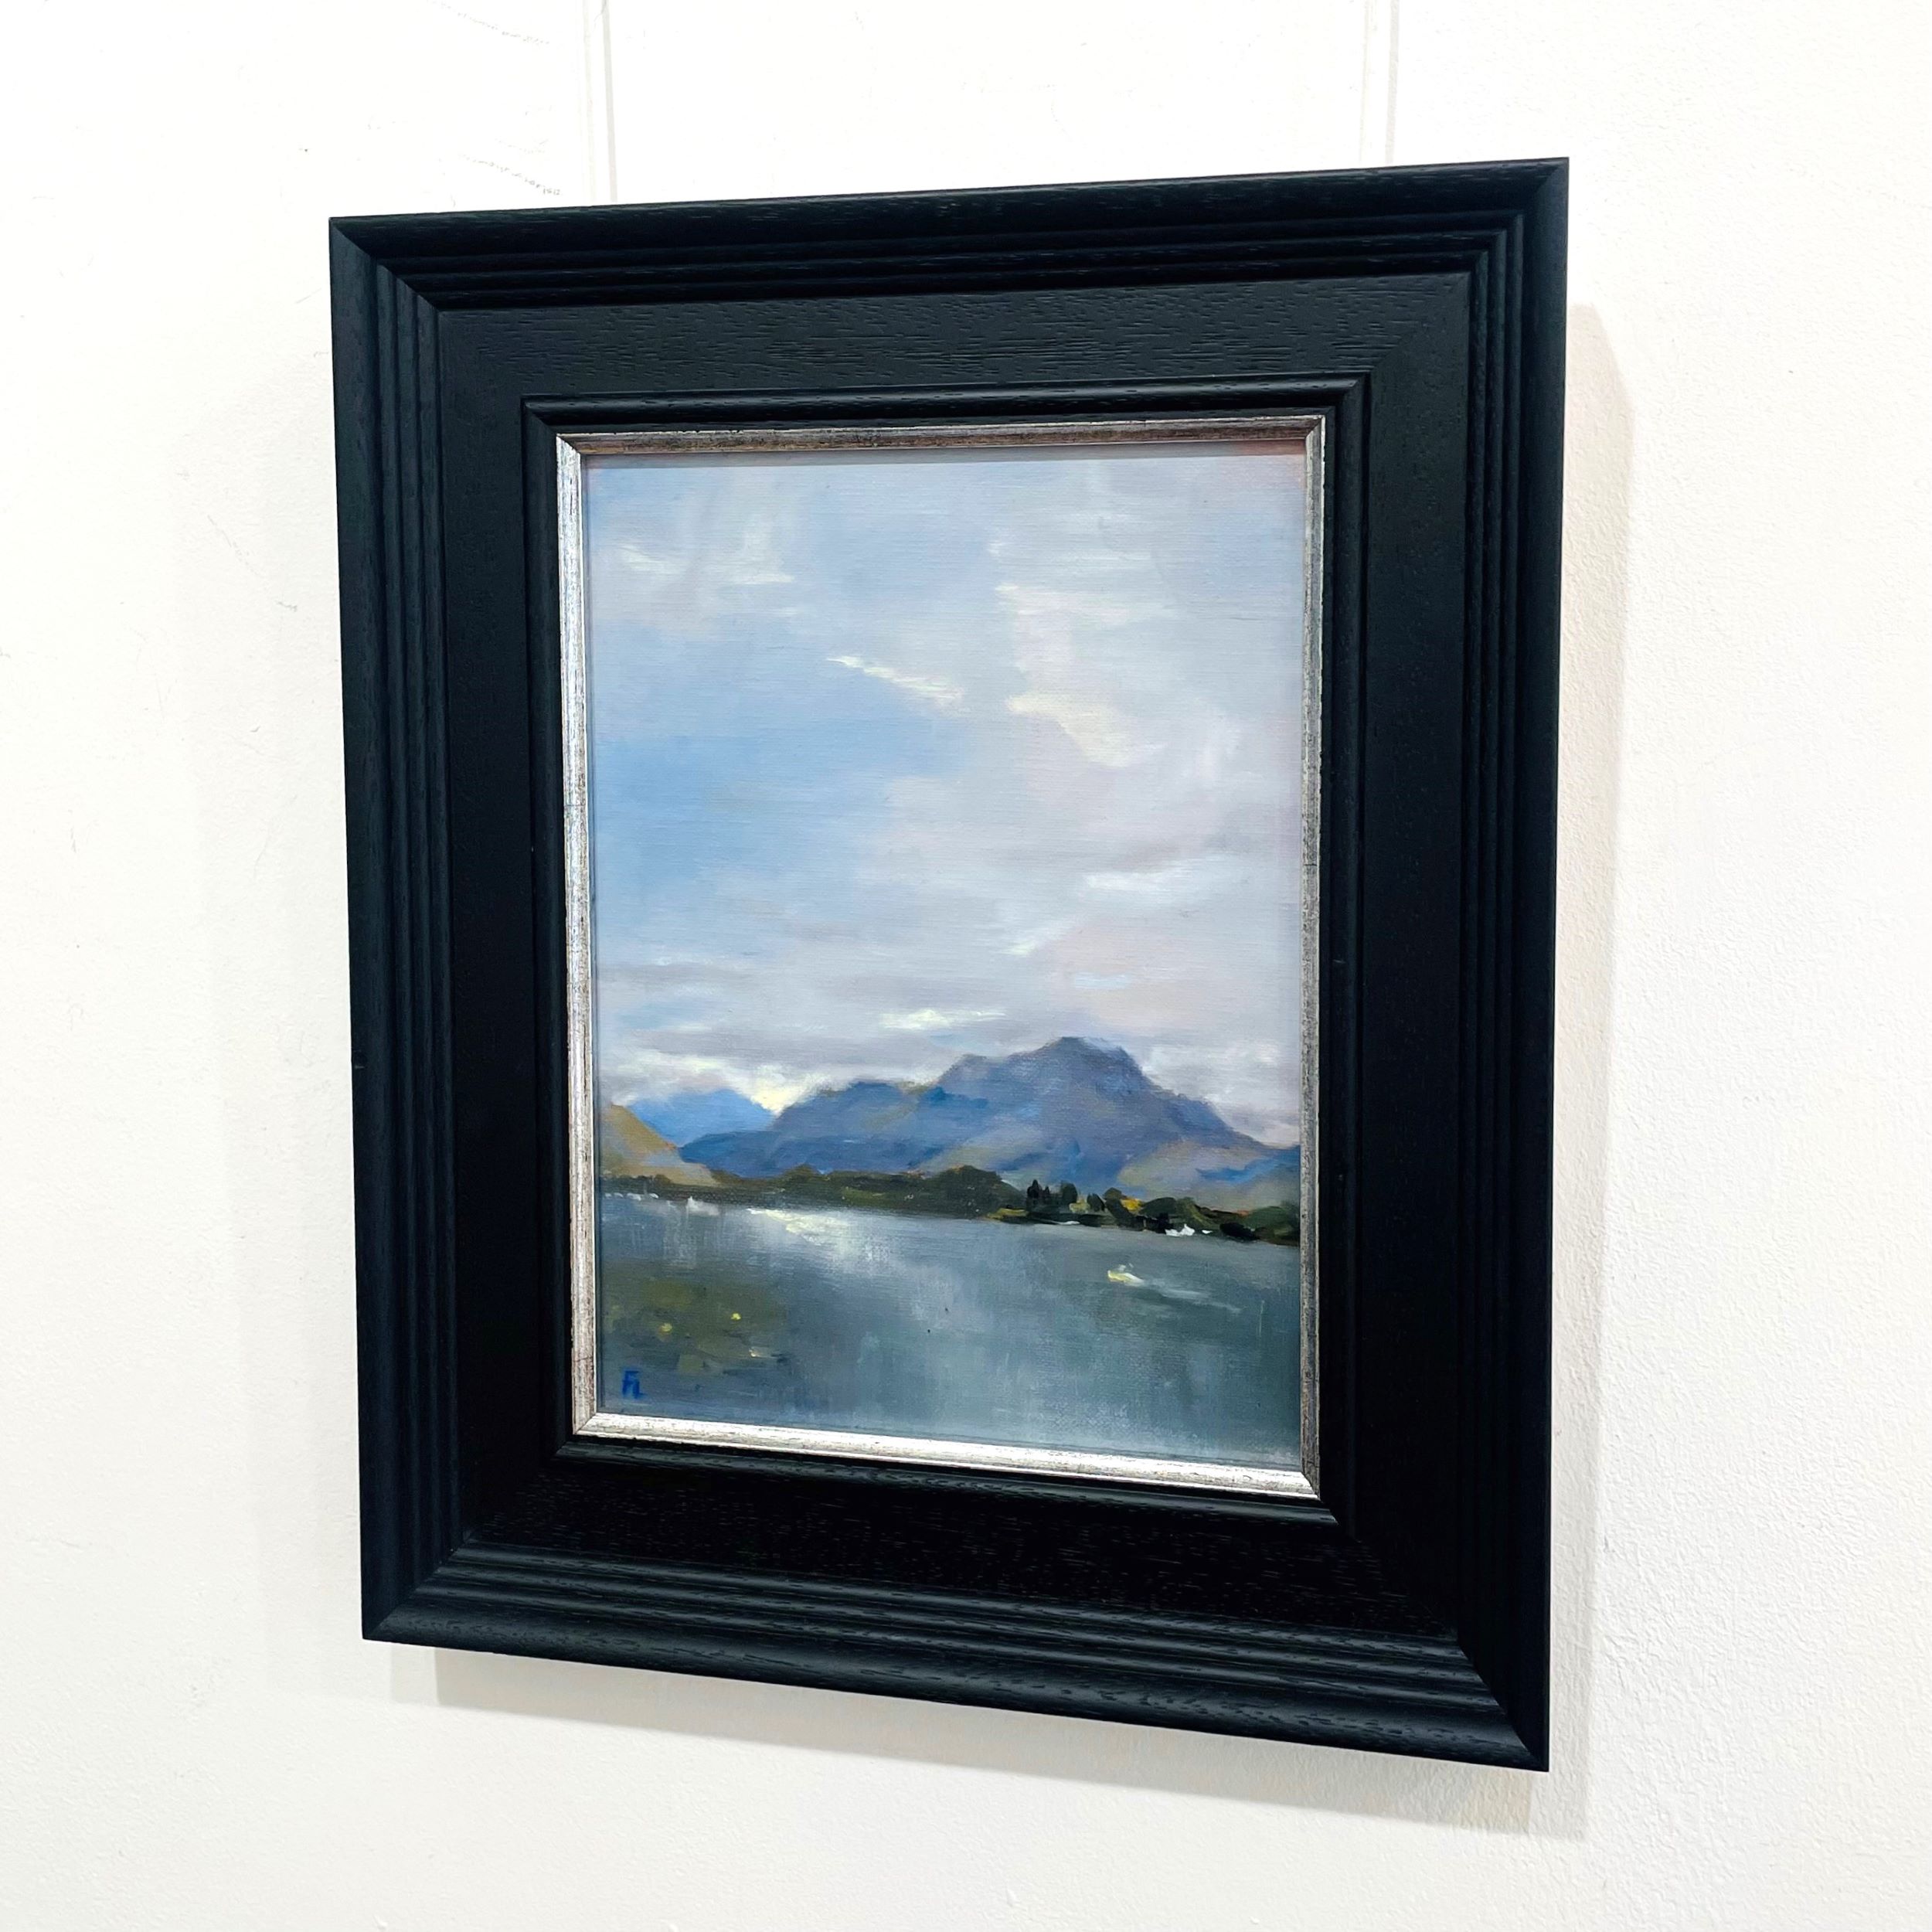 'Ben Lomond From Loch Lomond Shores' by artist Fiona Longley